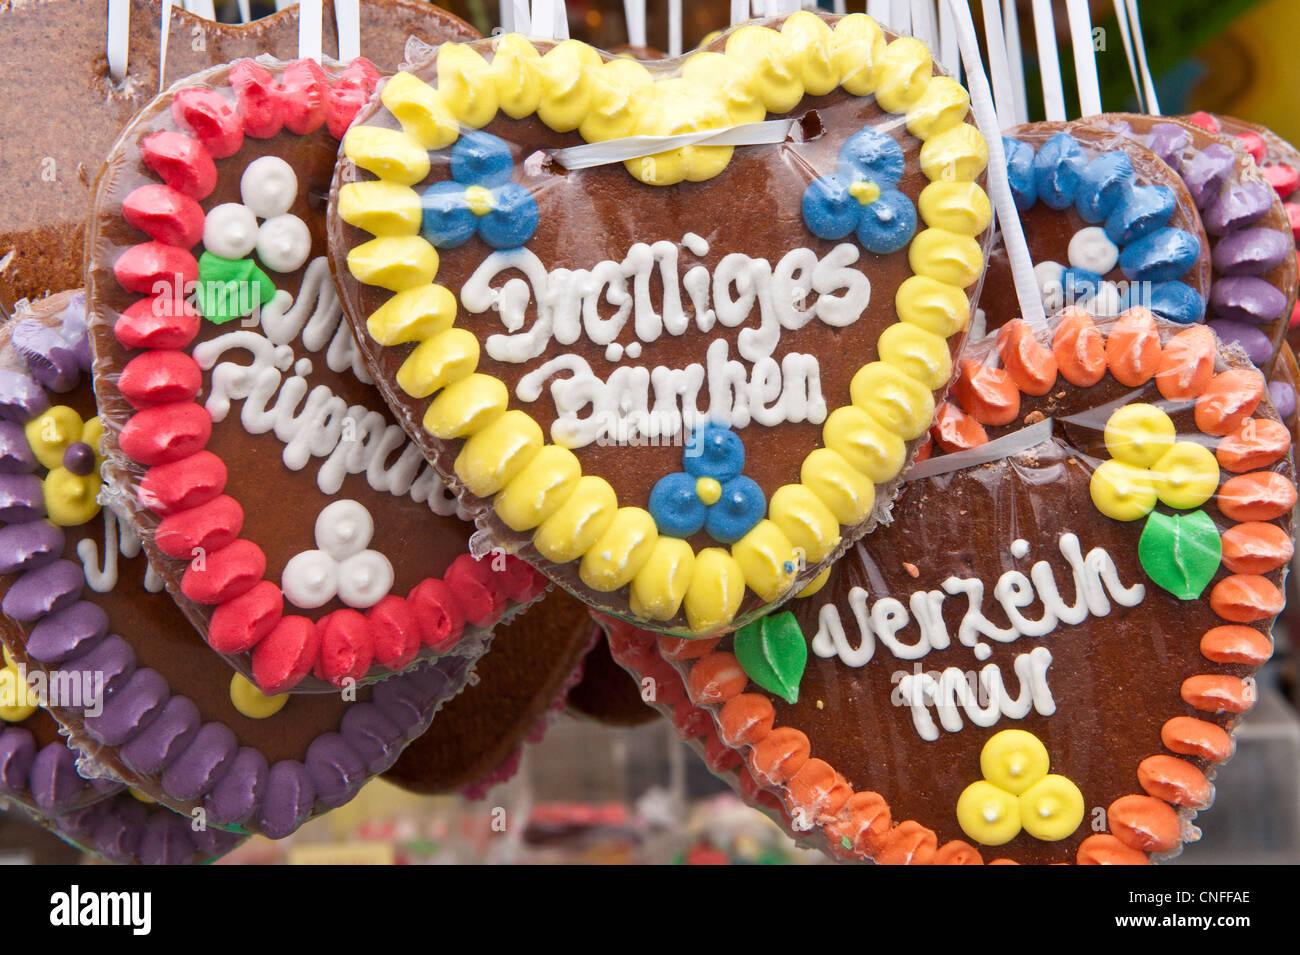 Decorative Lebkuchen gingerbread cookies at the Stuttgart Beer Festival, Cannstatter Wasen, Stuttgart, Germany. Stock Photo